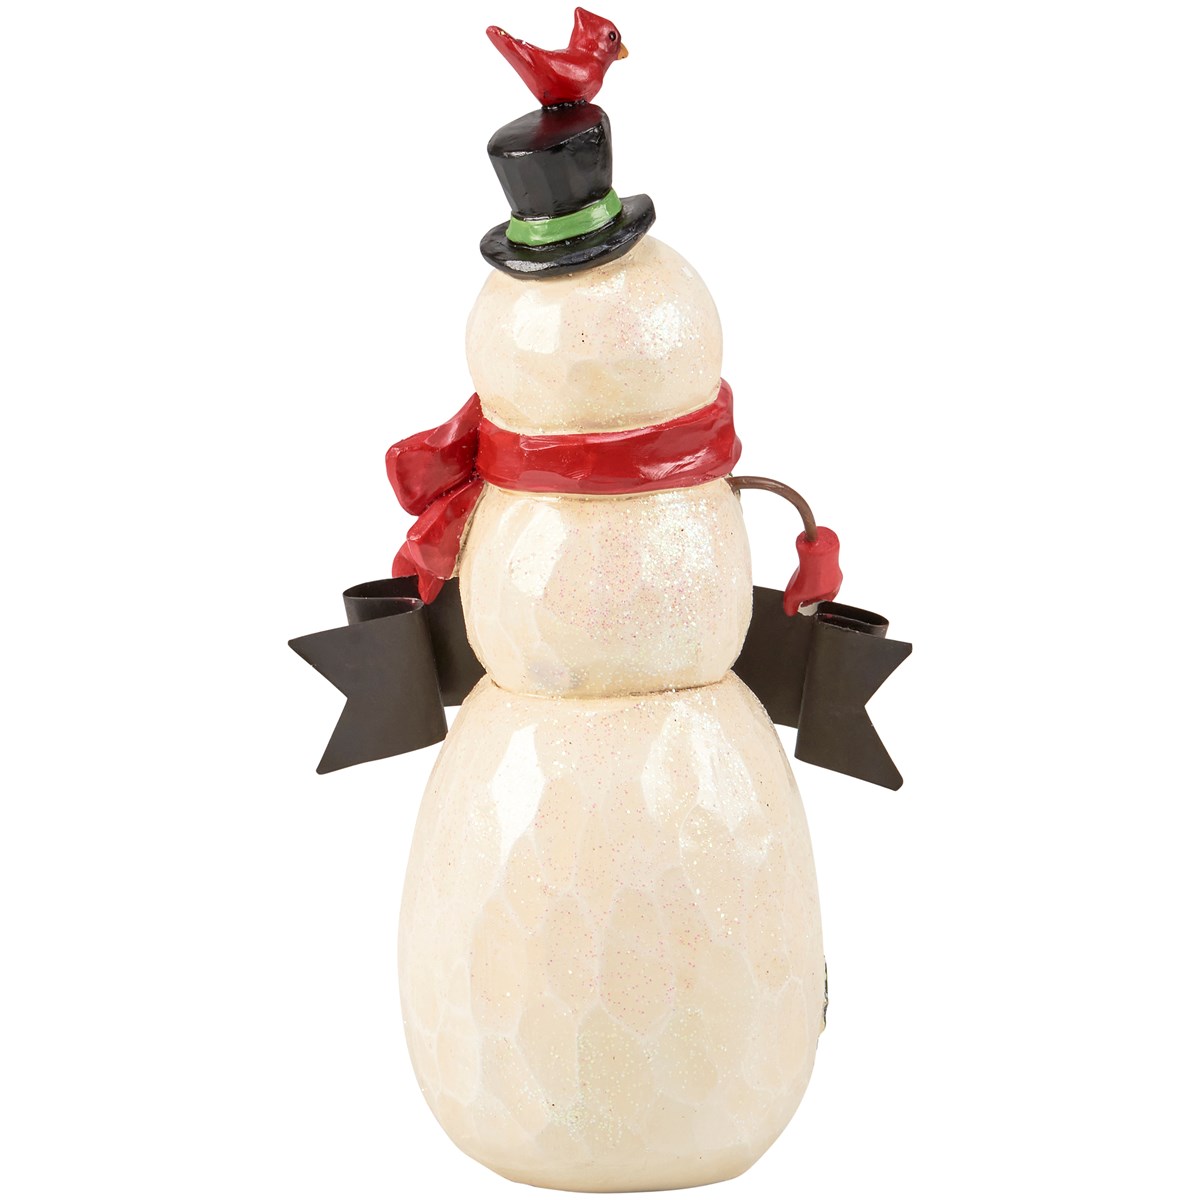 Be Merry Snowman Figurine - Resin, Metal